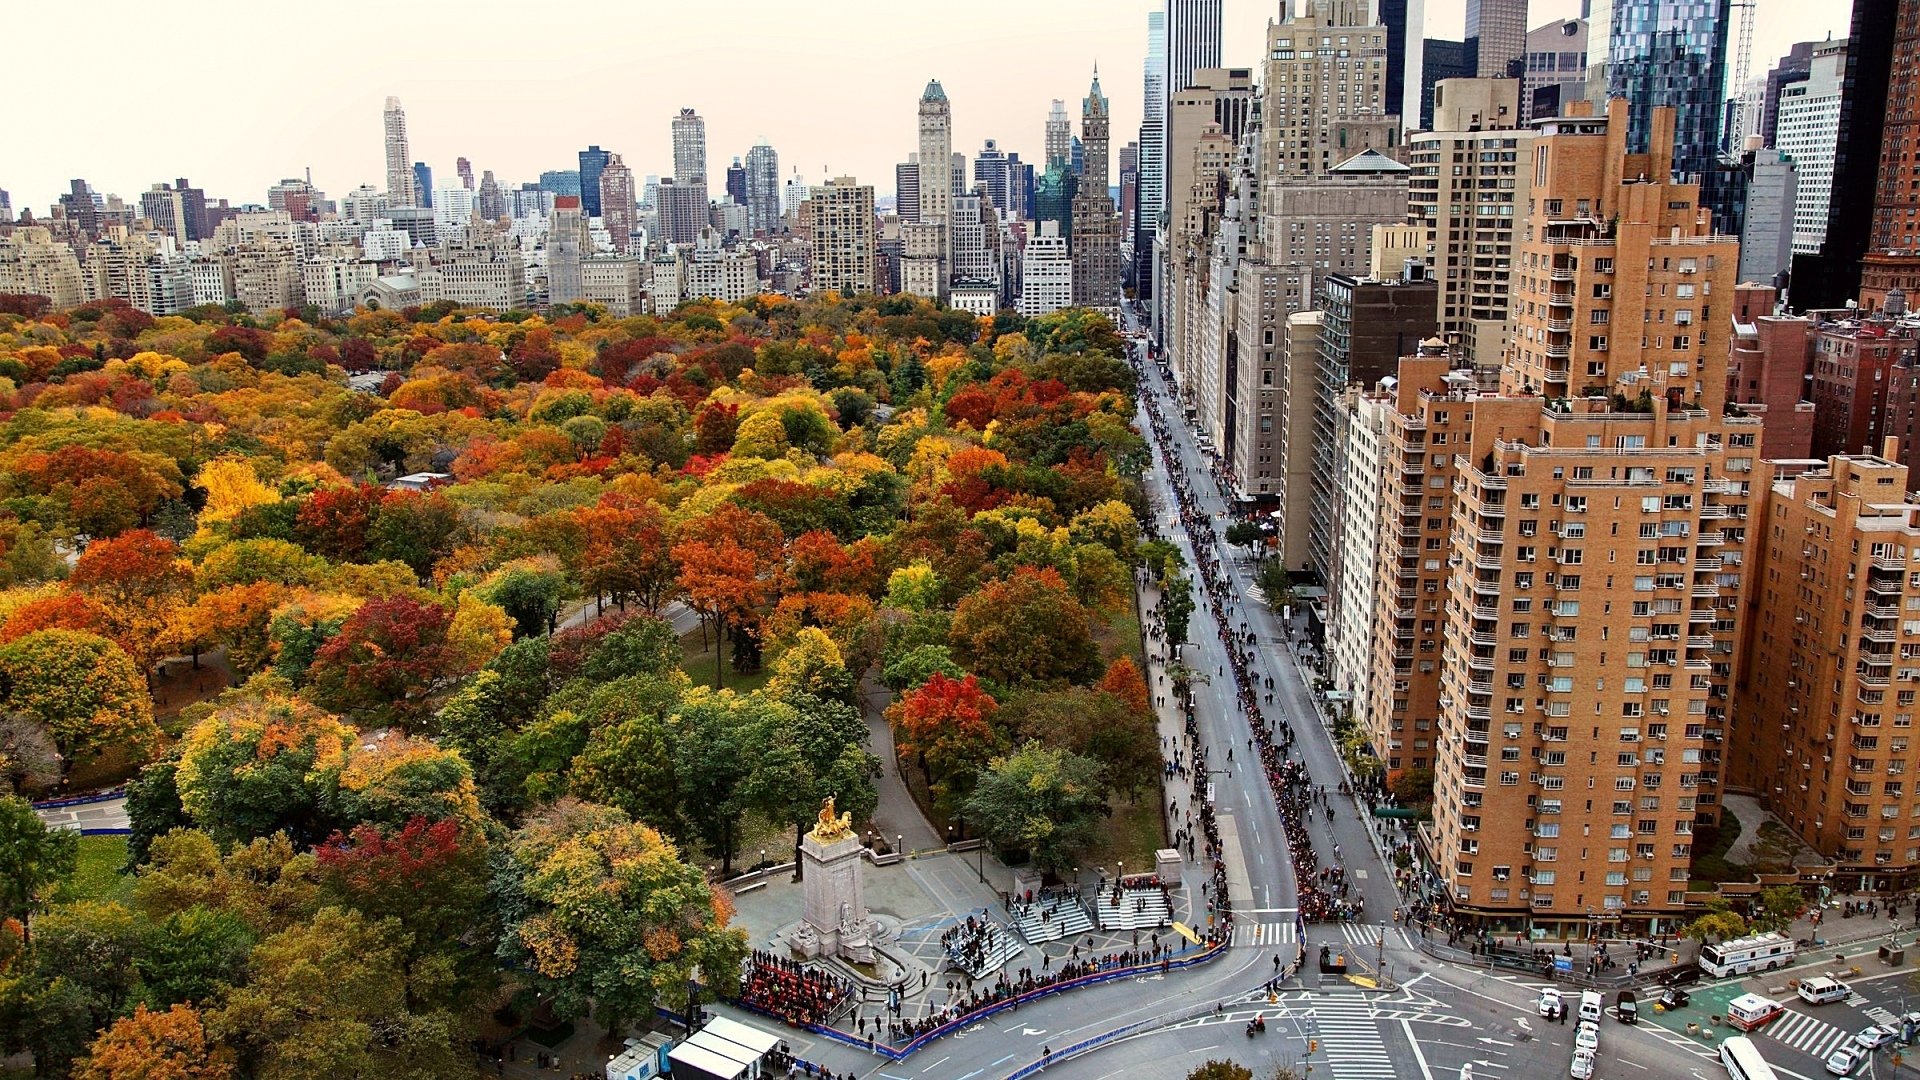 My new park. Централ парк Нью-Йорк. Нью-Йорк Манхэттен Центральный парк. Осень в Нью-Йорке Центральный парк. Централ парк осенью Нью Йорк.